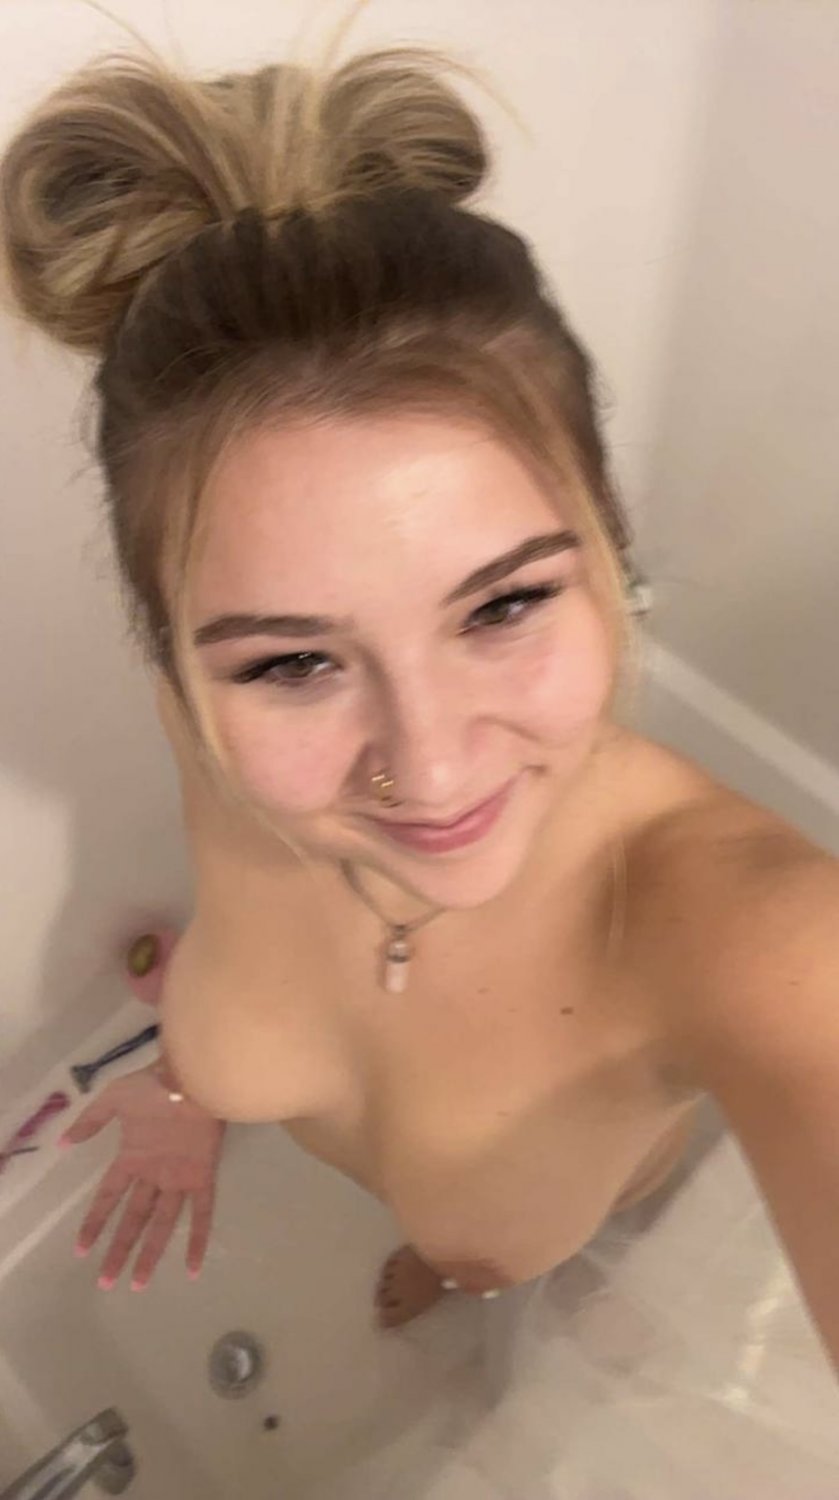 Teen Shower - College teen shower tits - Porn Videos & Photos - EroMe